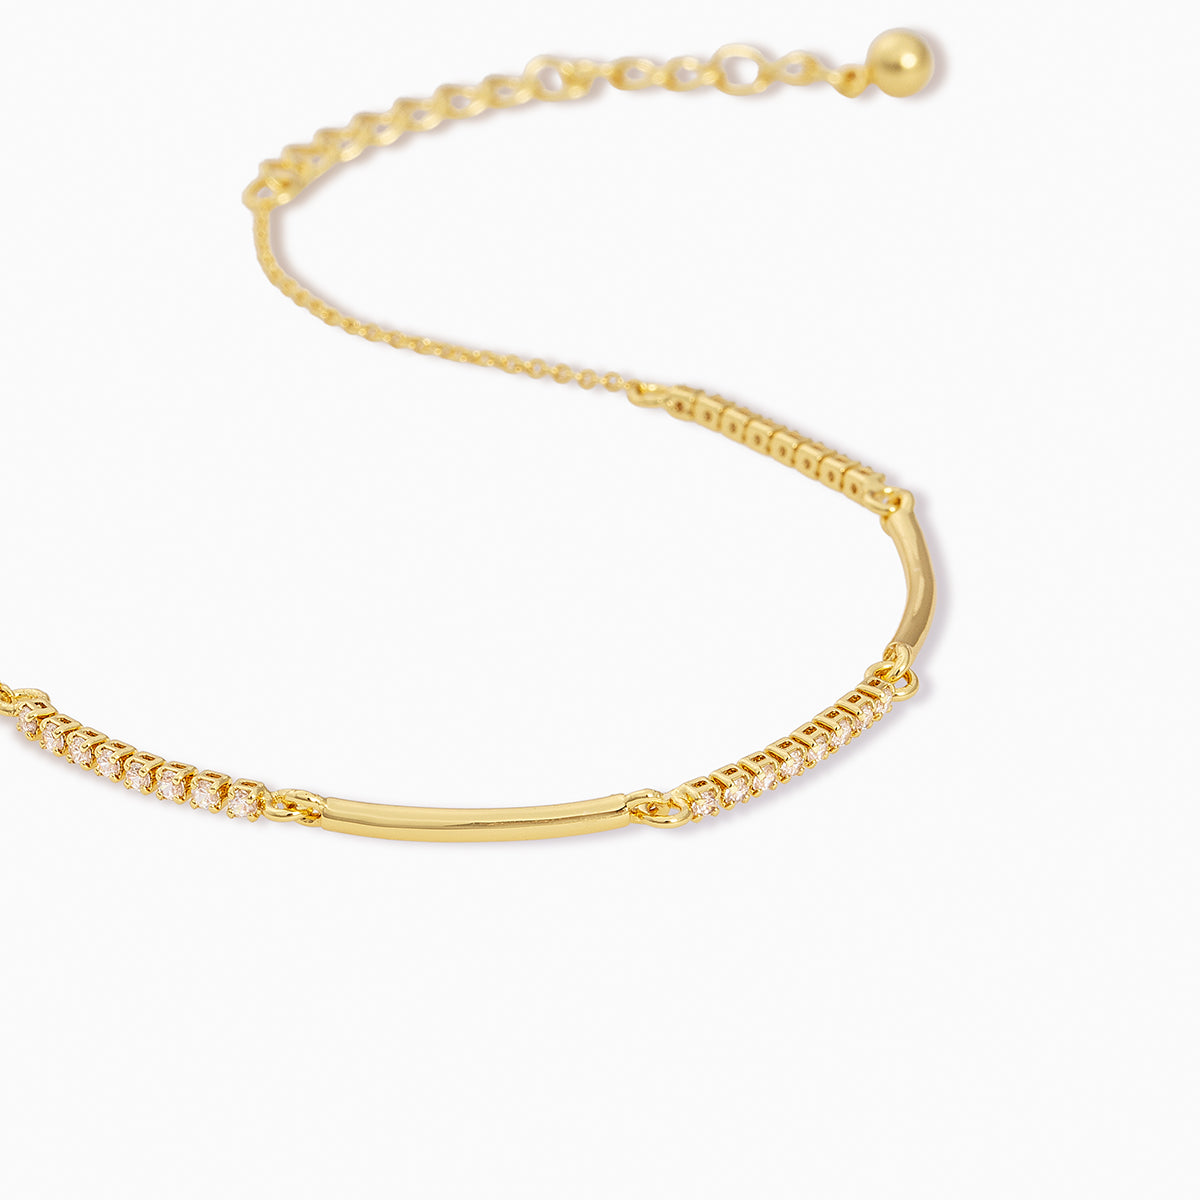 Studded Bracelet | Gold | Product Detail Image | Uncommon James